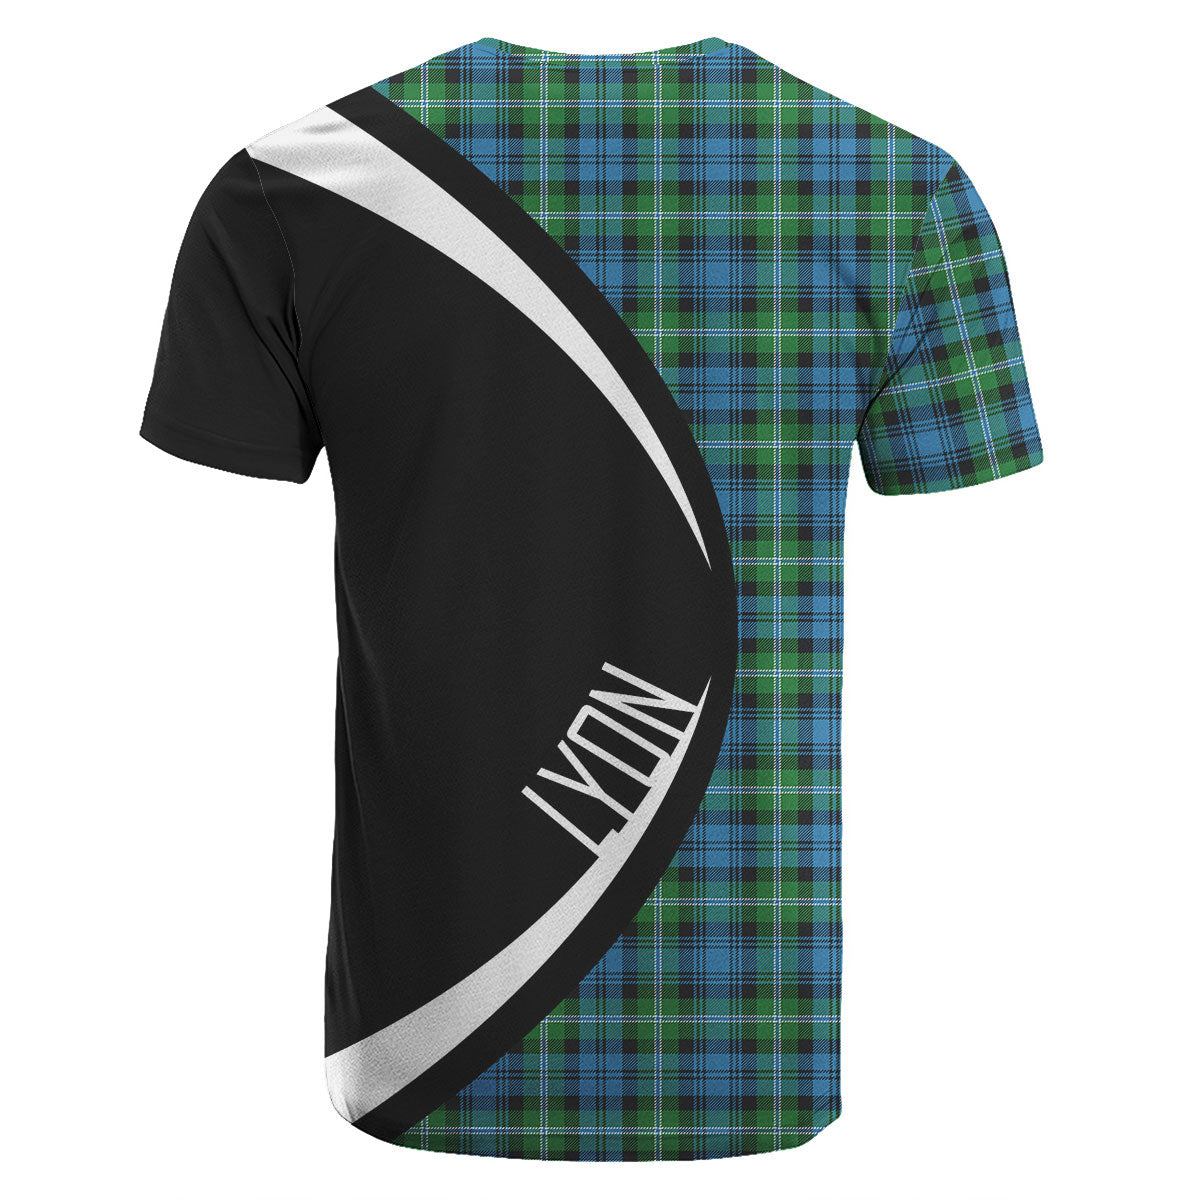 Lyon Tartan Crest T-shirt - Circle Style